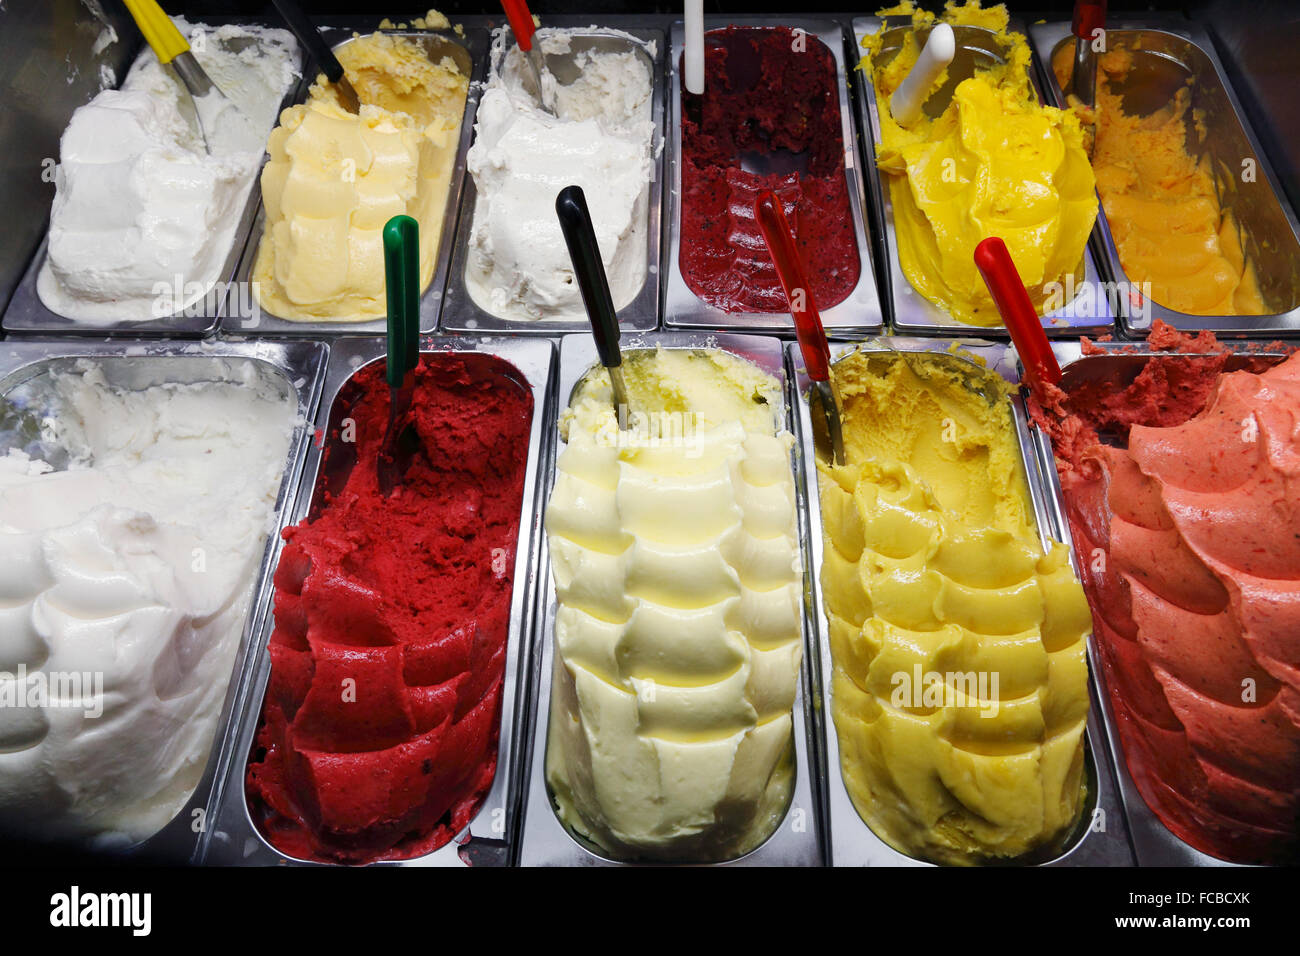 ice cream parlour in Rome, Italy Stock Photo